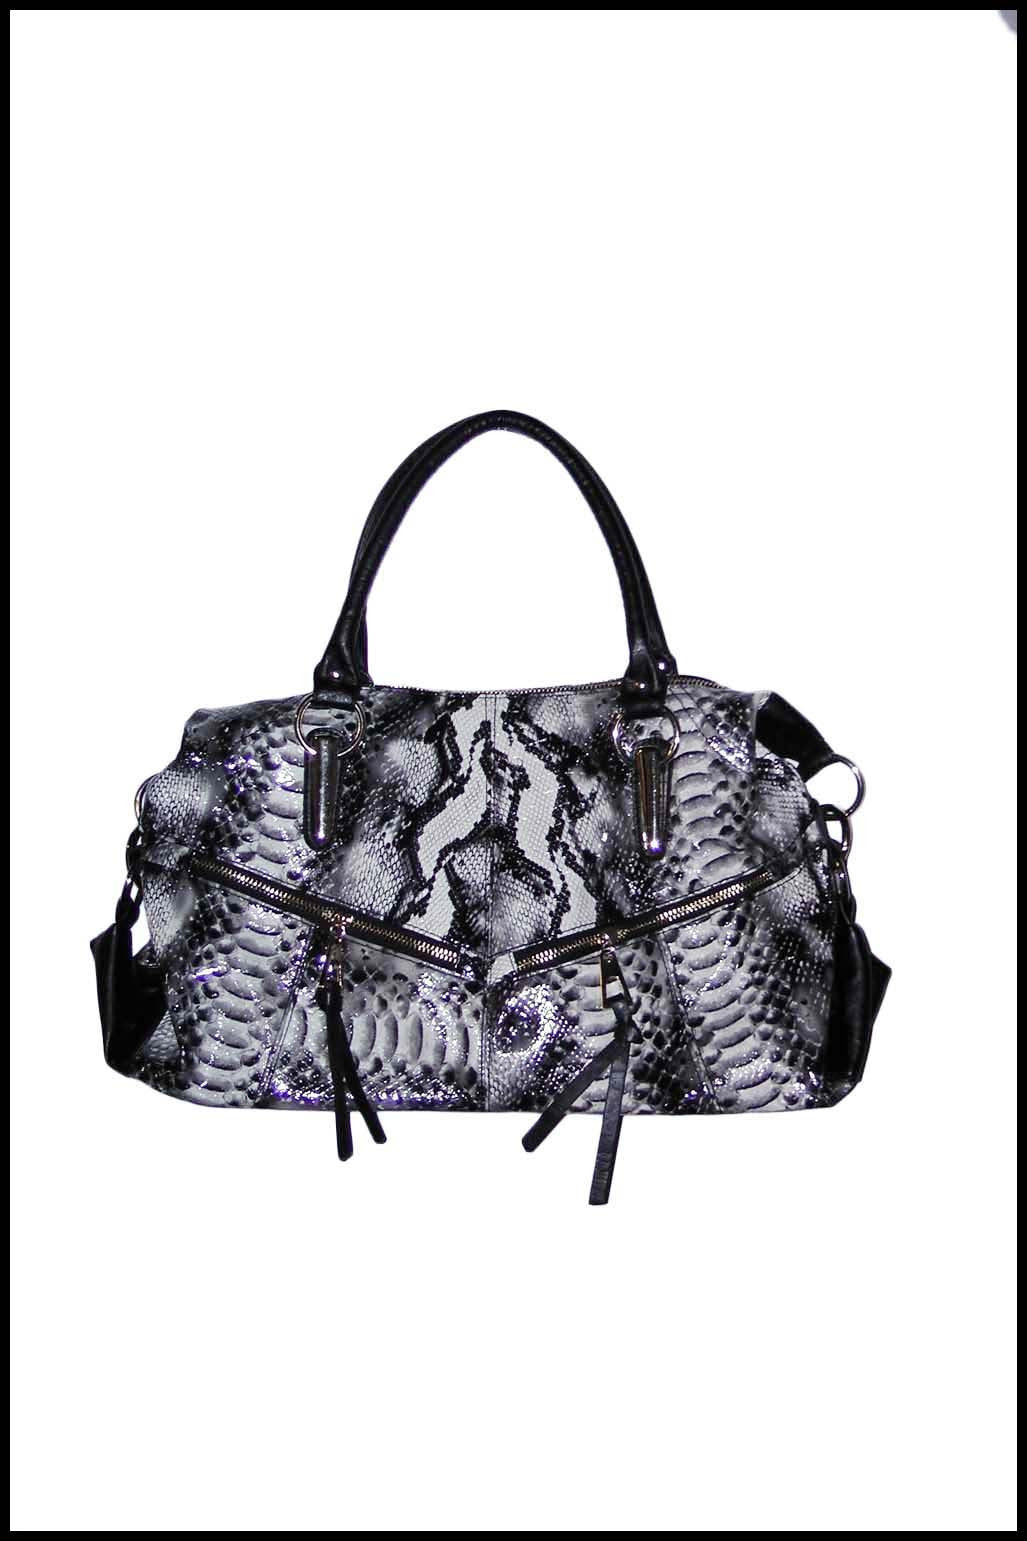 Faux Snakeskin Handbag with Tasseled Zipper Detailing